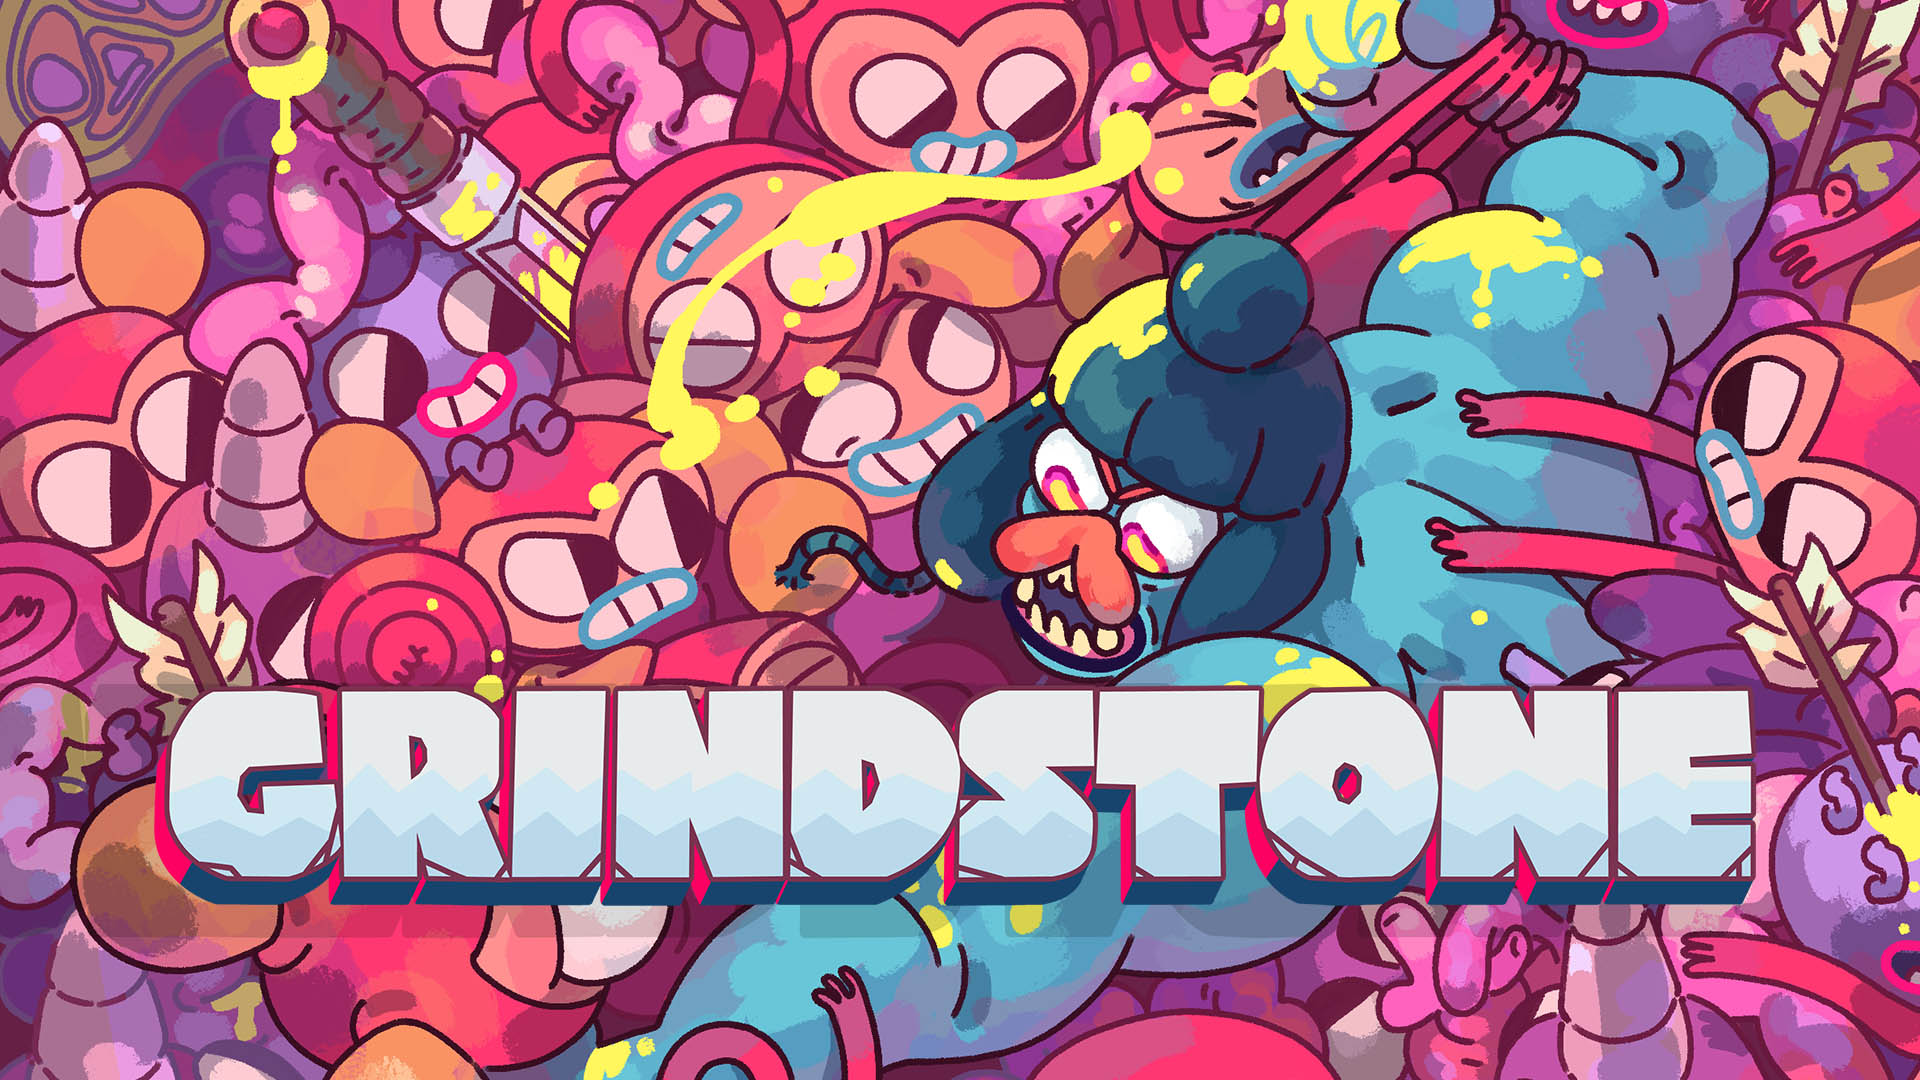 Grindstone banner. Blue muscular warrior is slashing through pink-coloured monsters.